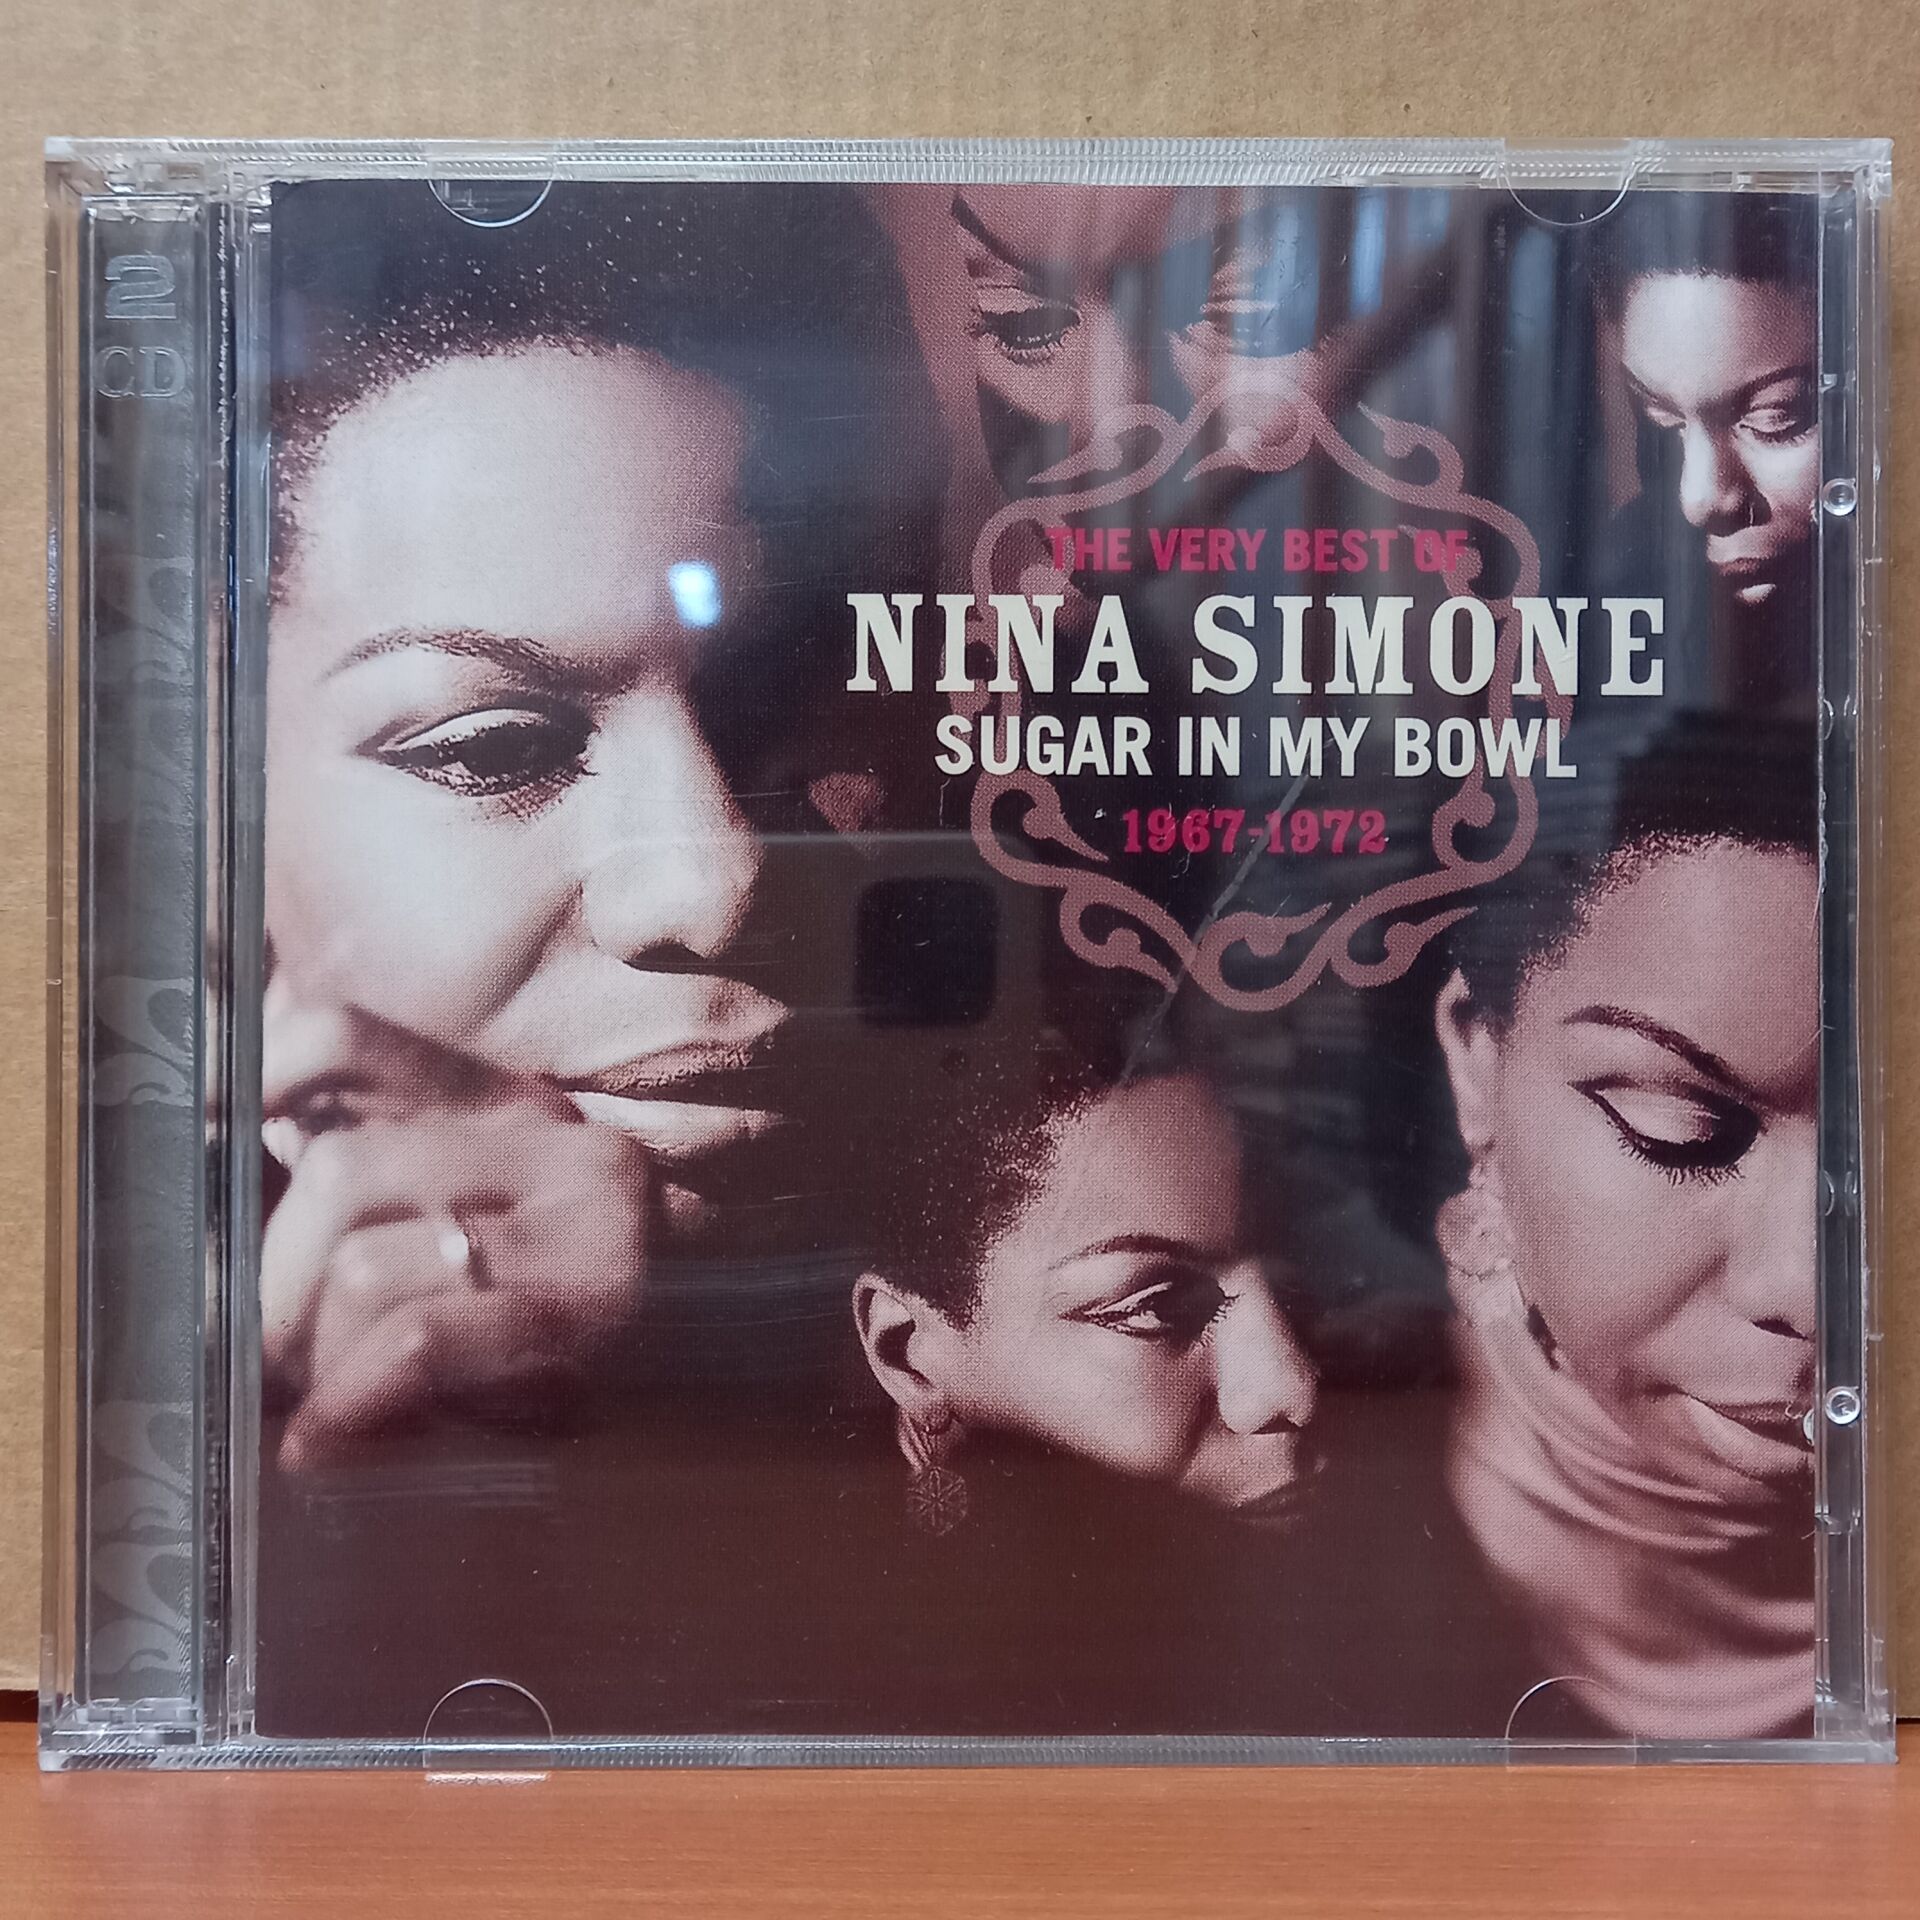 NINA SIMONE – THE VERY BEST OF NINA SIMONE 1967-1972 / SUGAR IN MY BOWL (1998) - 2CD 2.EL